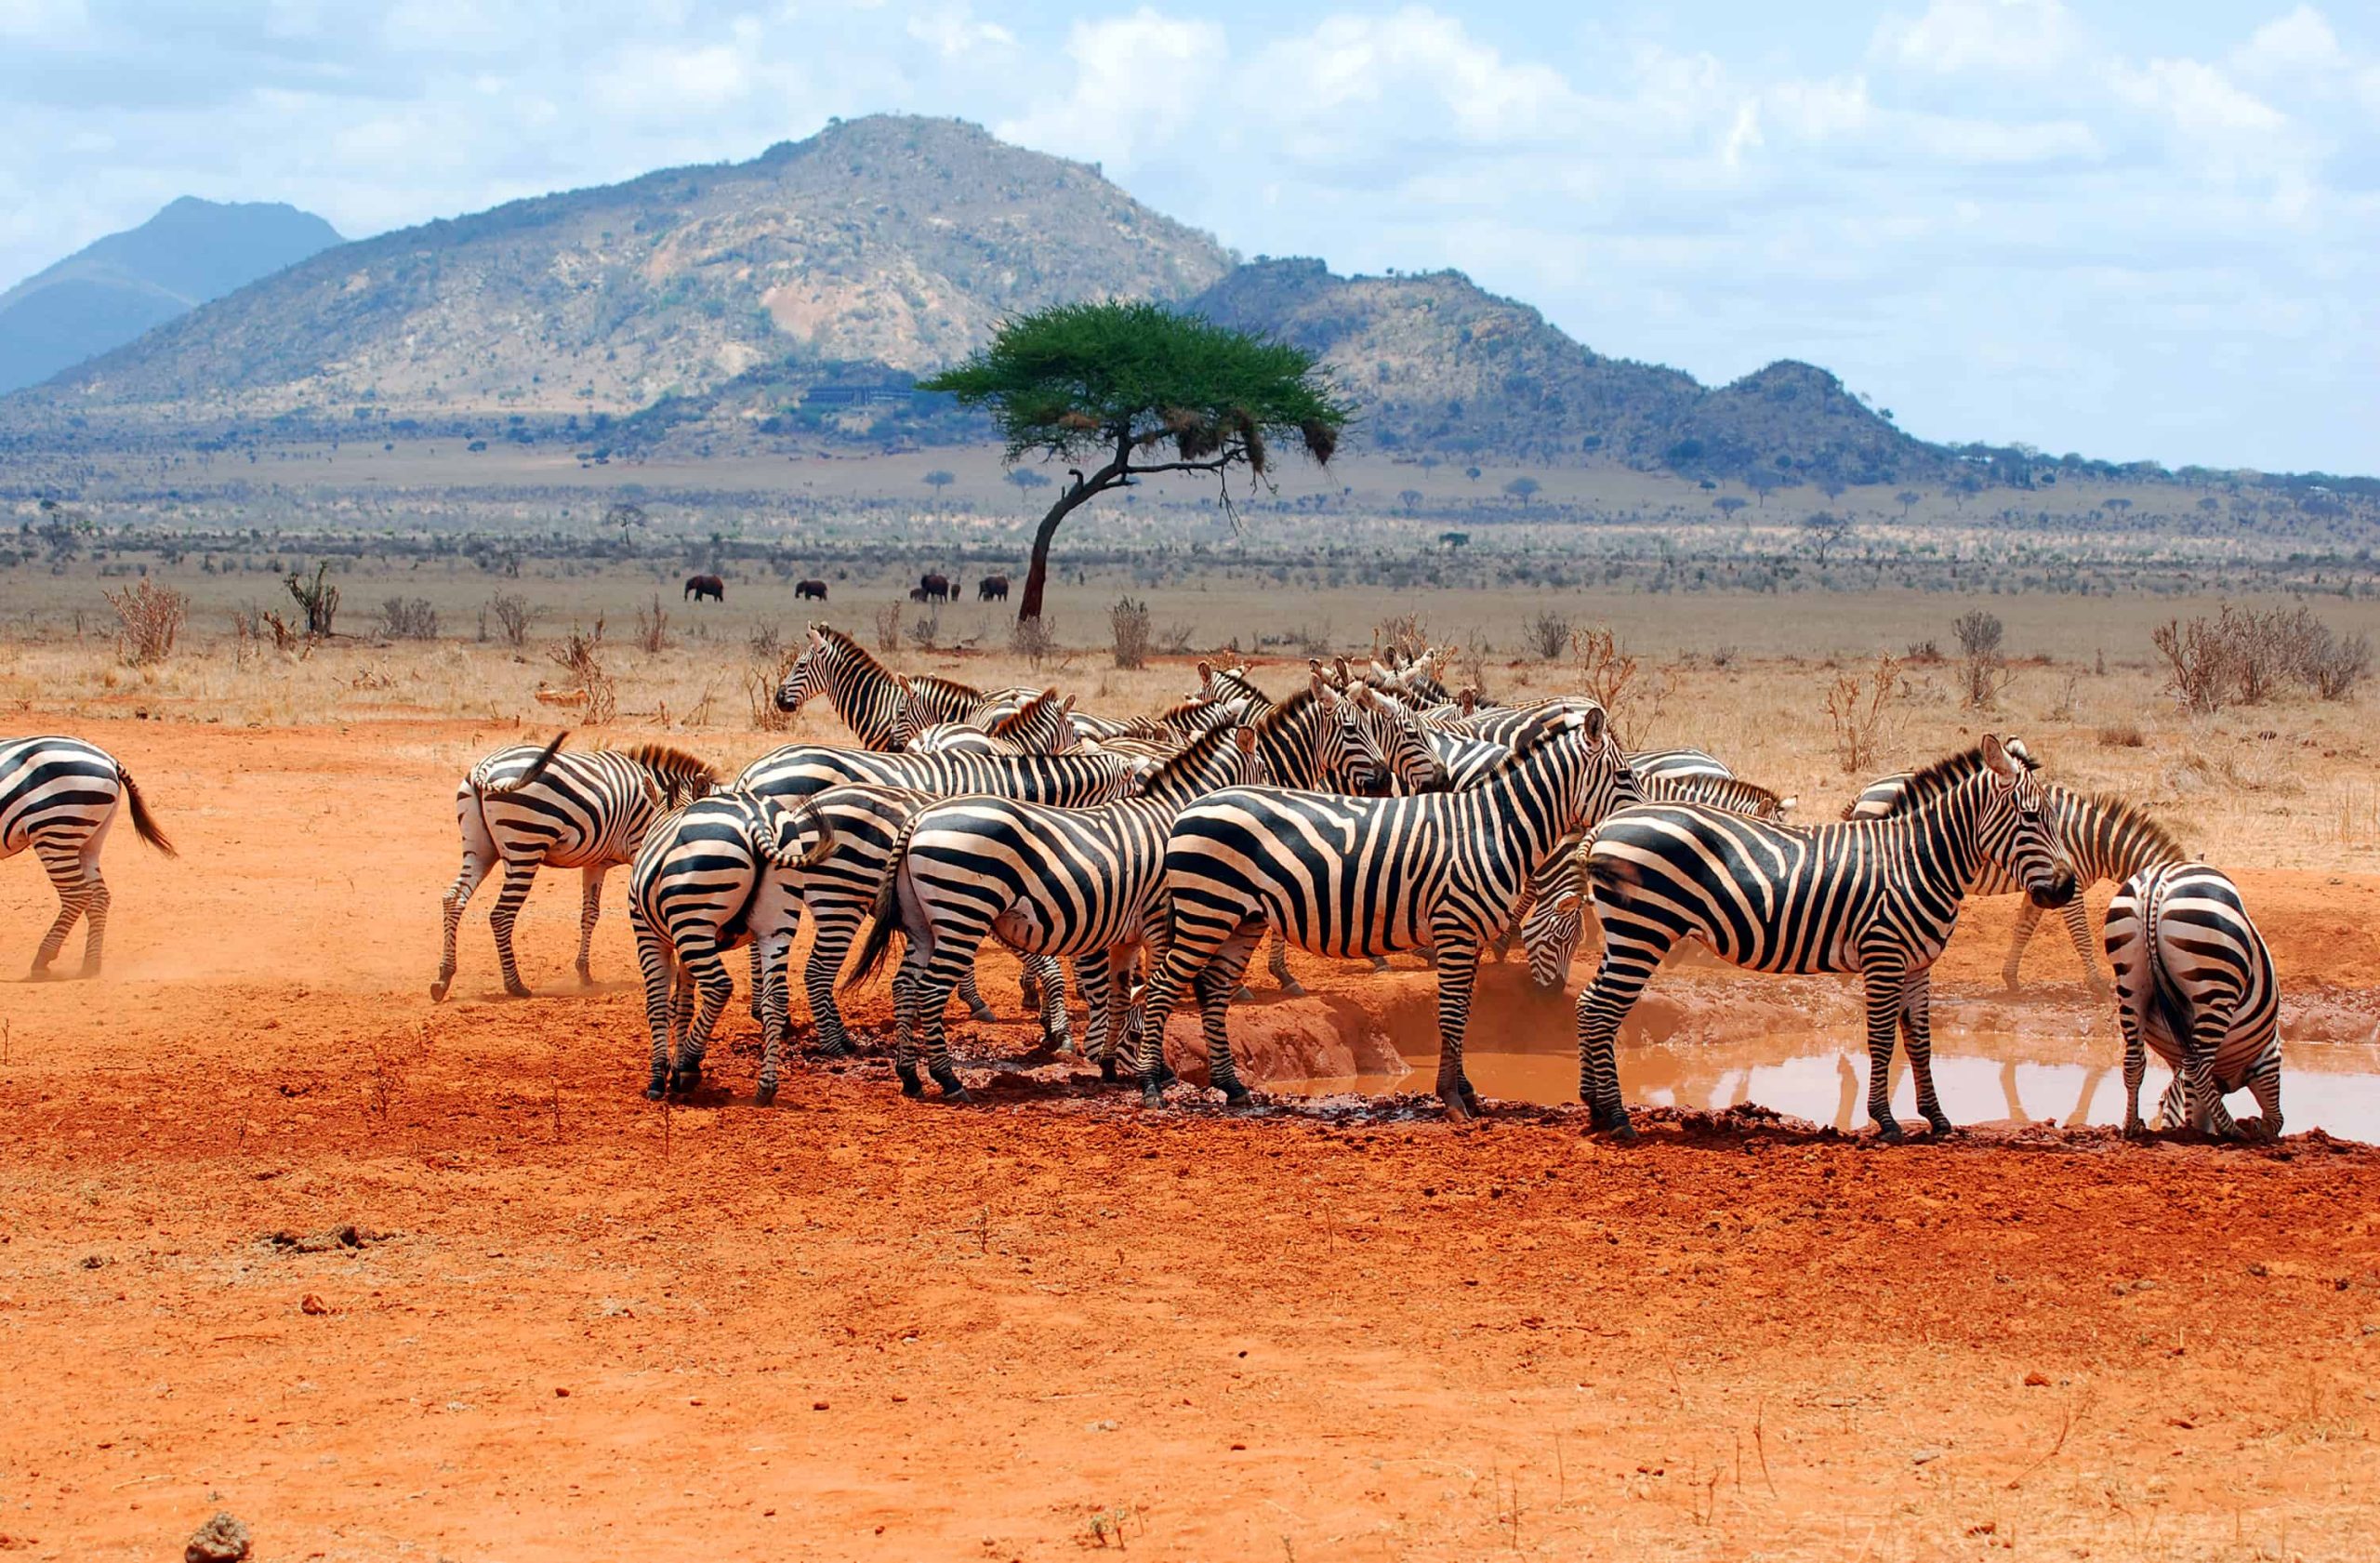 Heard of zebras on the safari